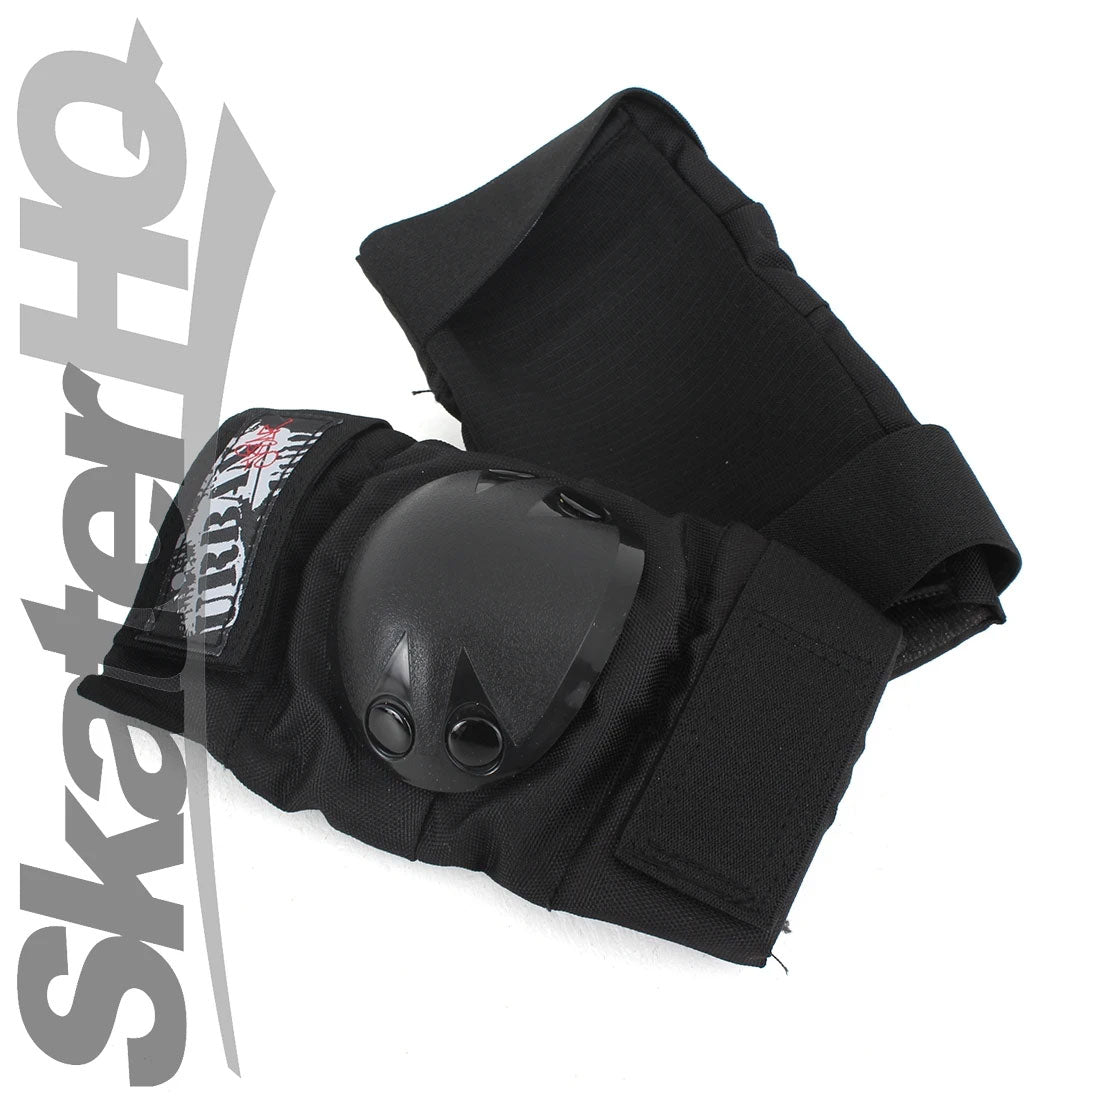 Urban Skater Knee/Elbow Black - Grommet Protective Gear